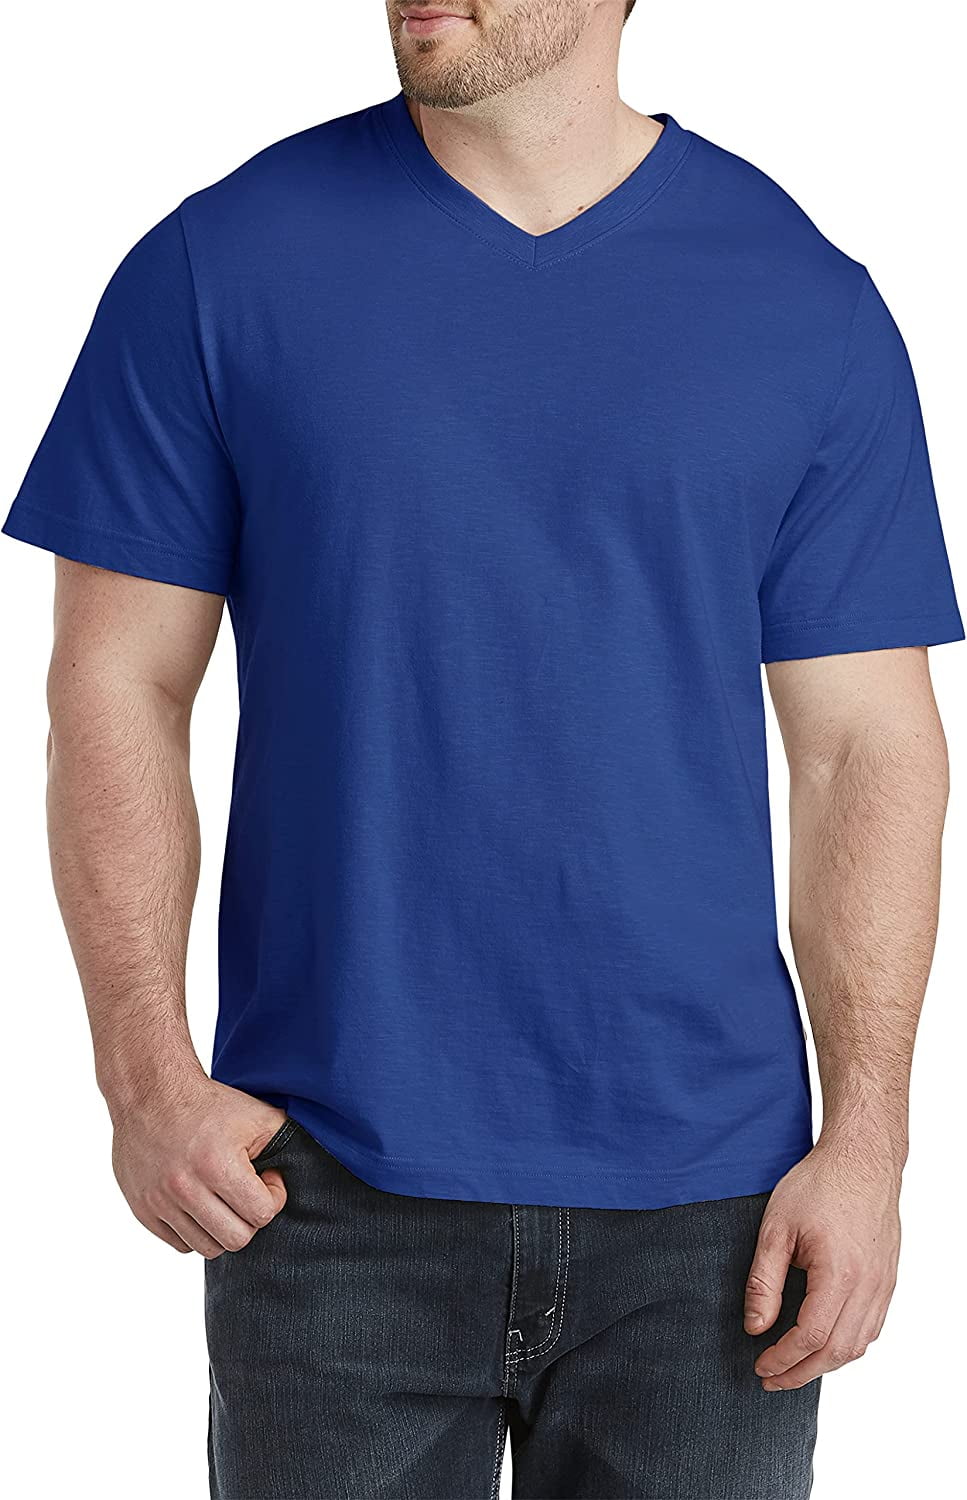 Harbor Bay by DXL Men's Big and Tall Slub Knit V-Neck T-Shirt